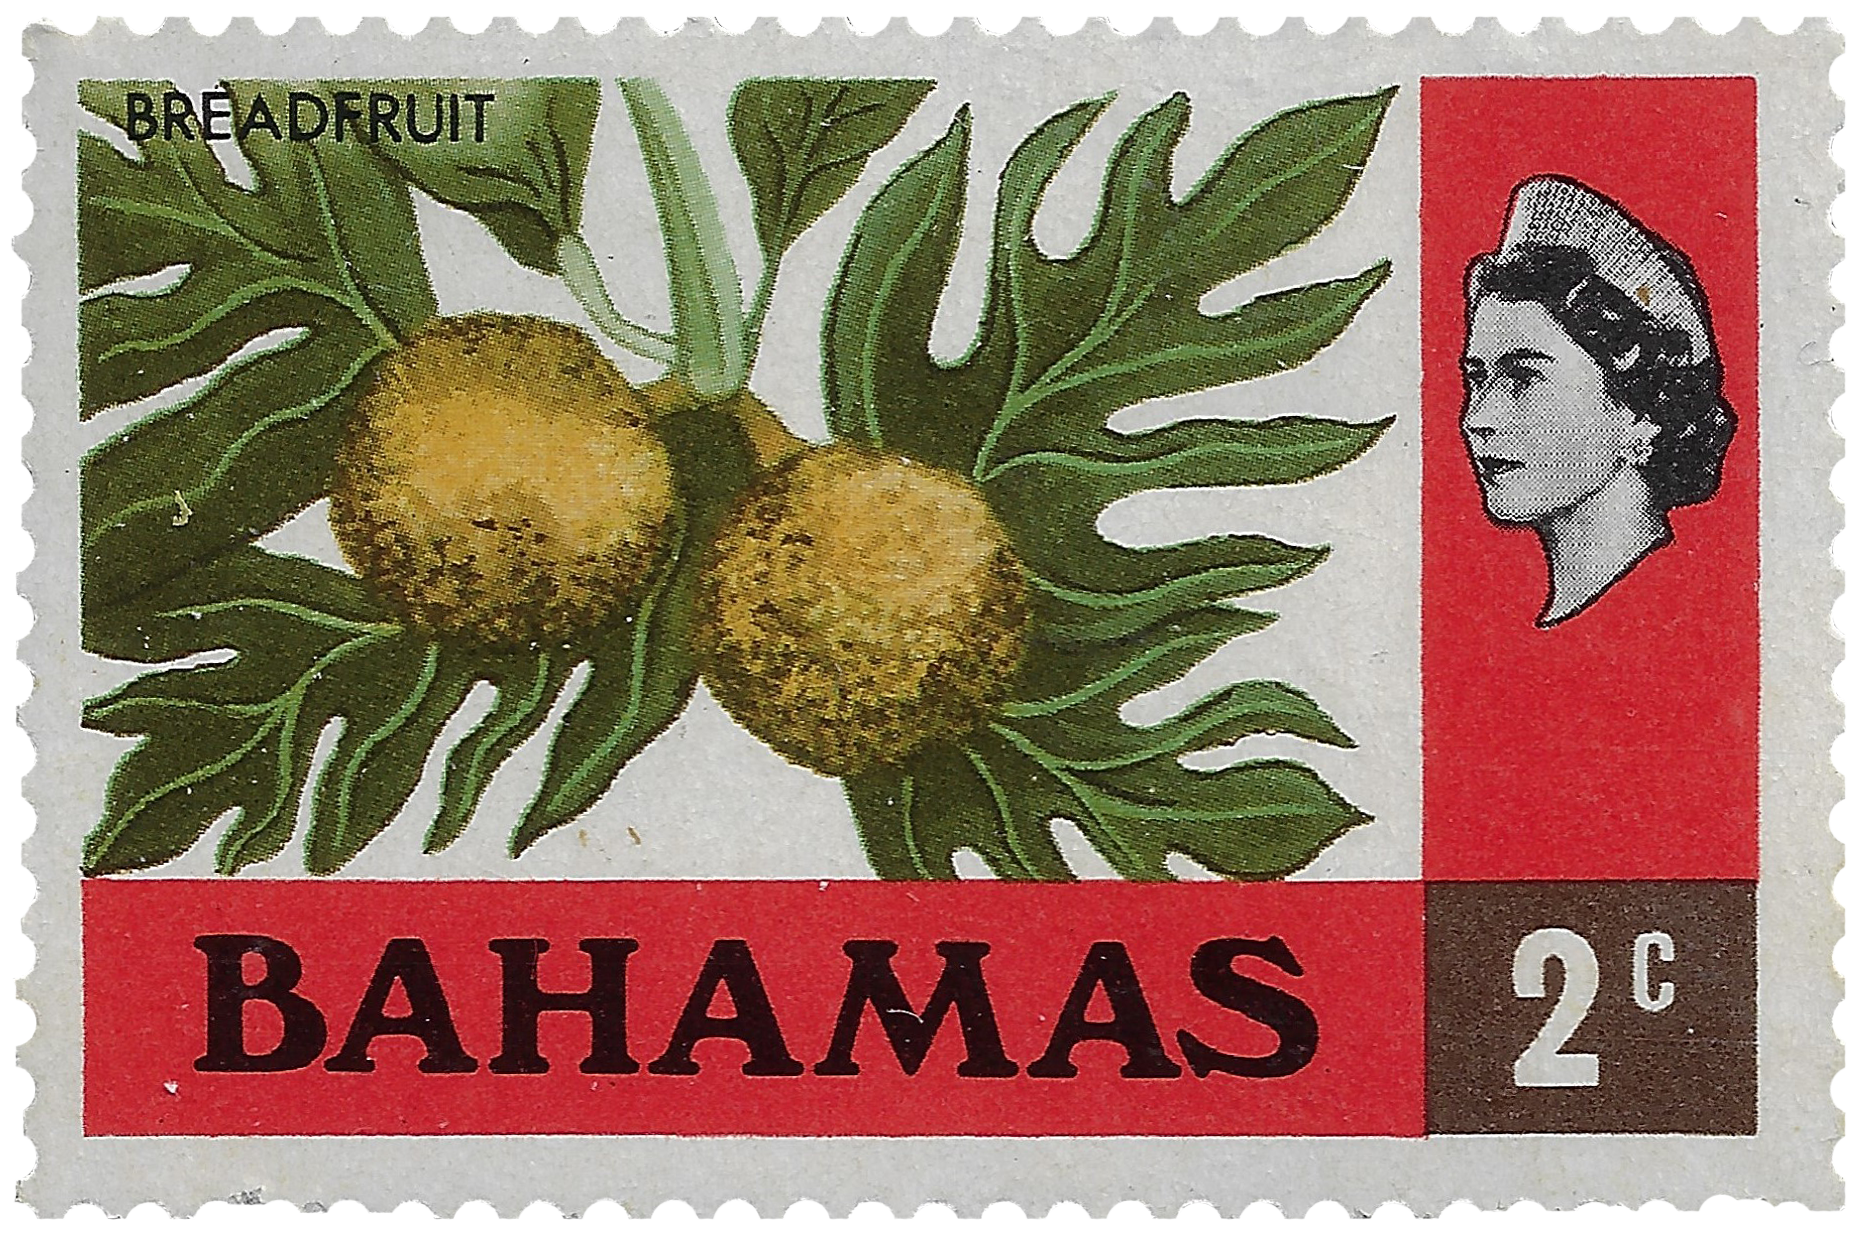 2c 1971, Breadfruit